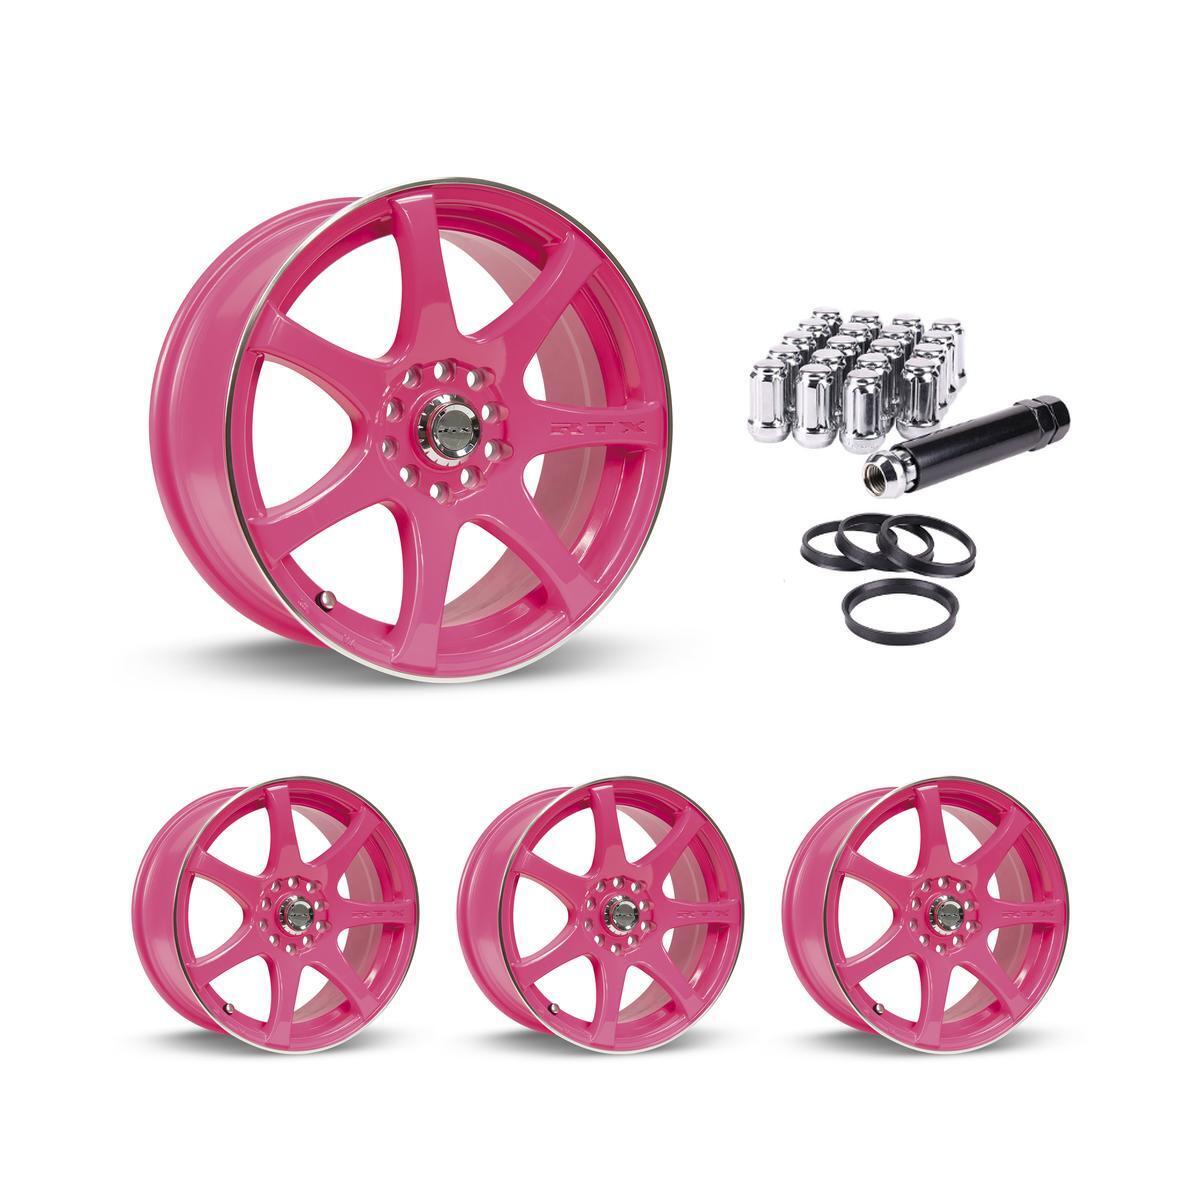 Wheel Rims Set with Chrome Lug Nuts Kit for 05 Toyota MR2 Spyder P814003 15 inch